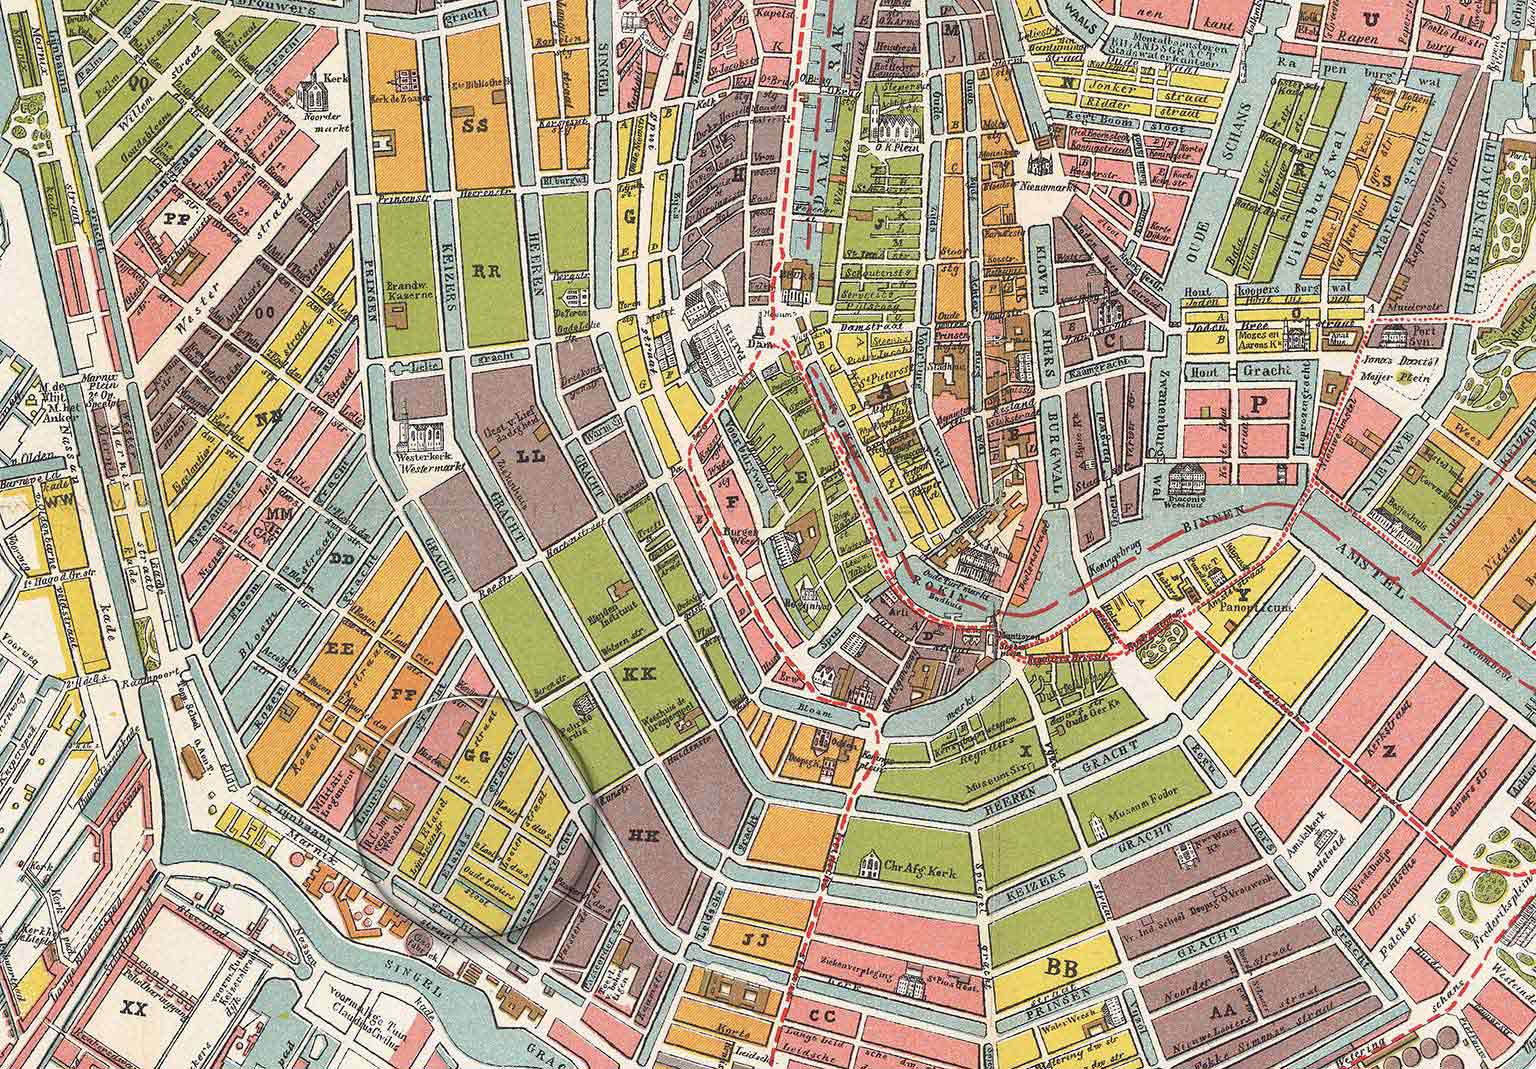 Elandsgracht, Amsterdam, still a canal, on a map from 1882